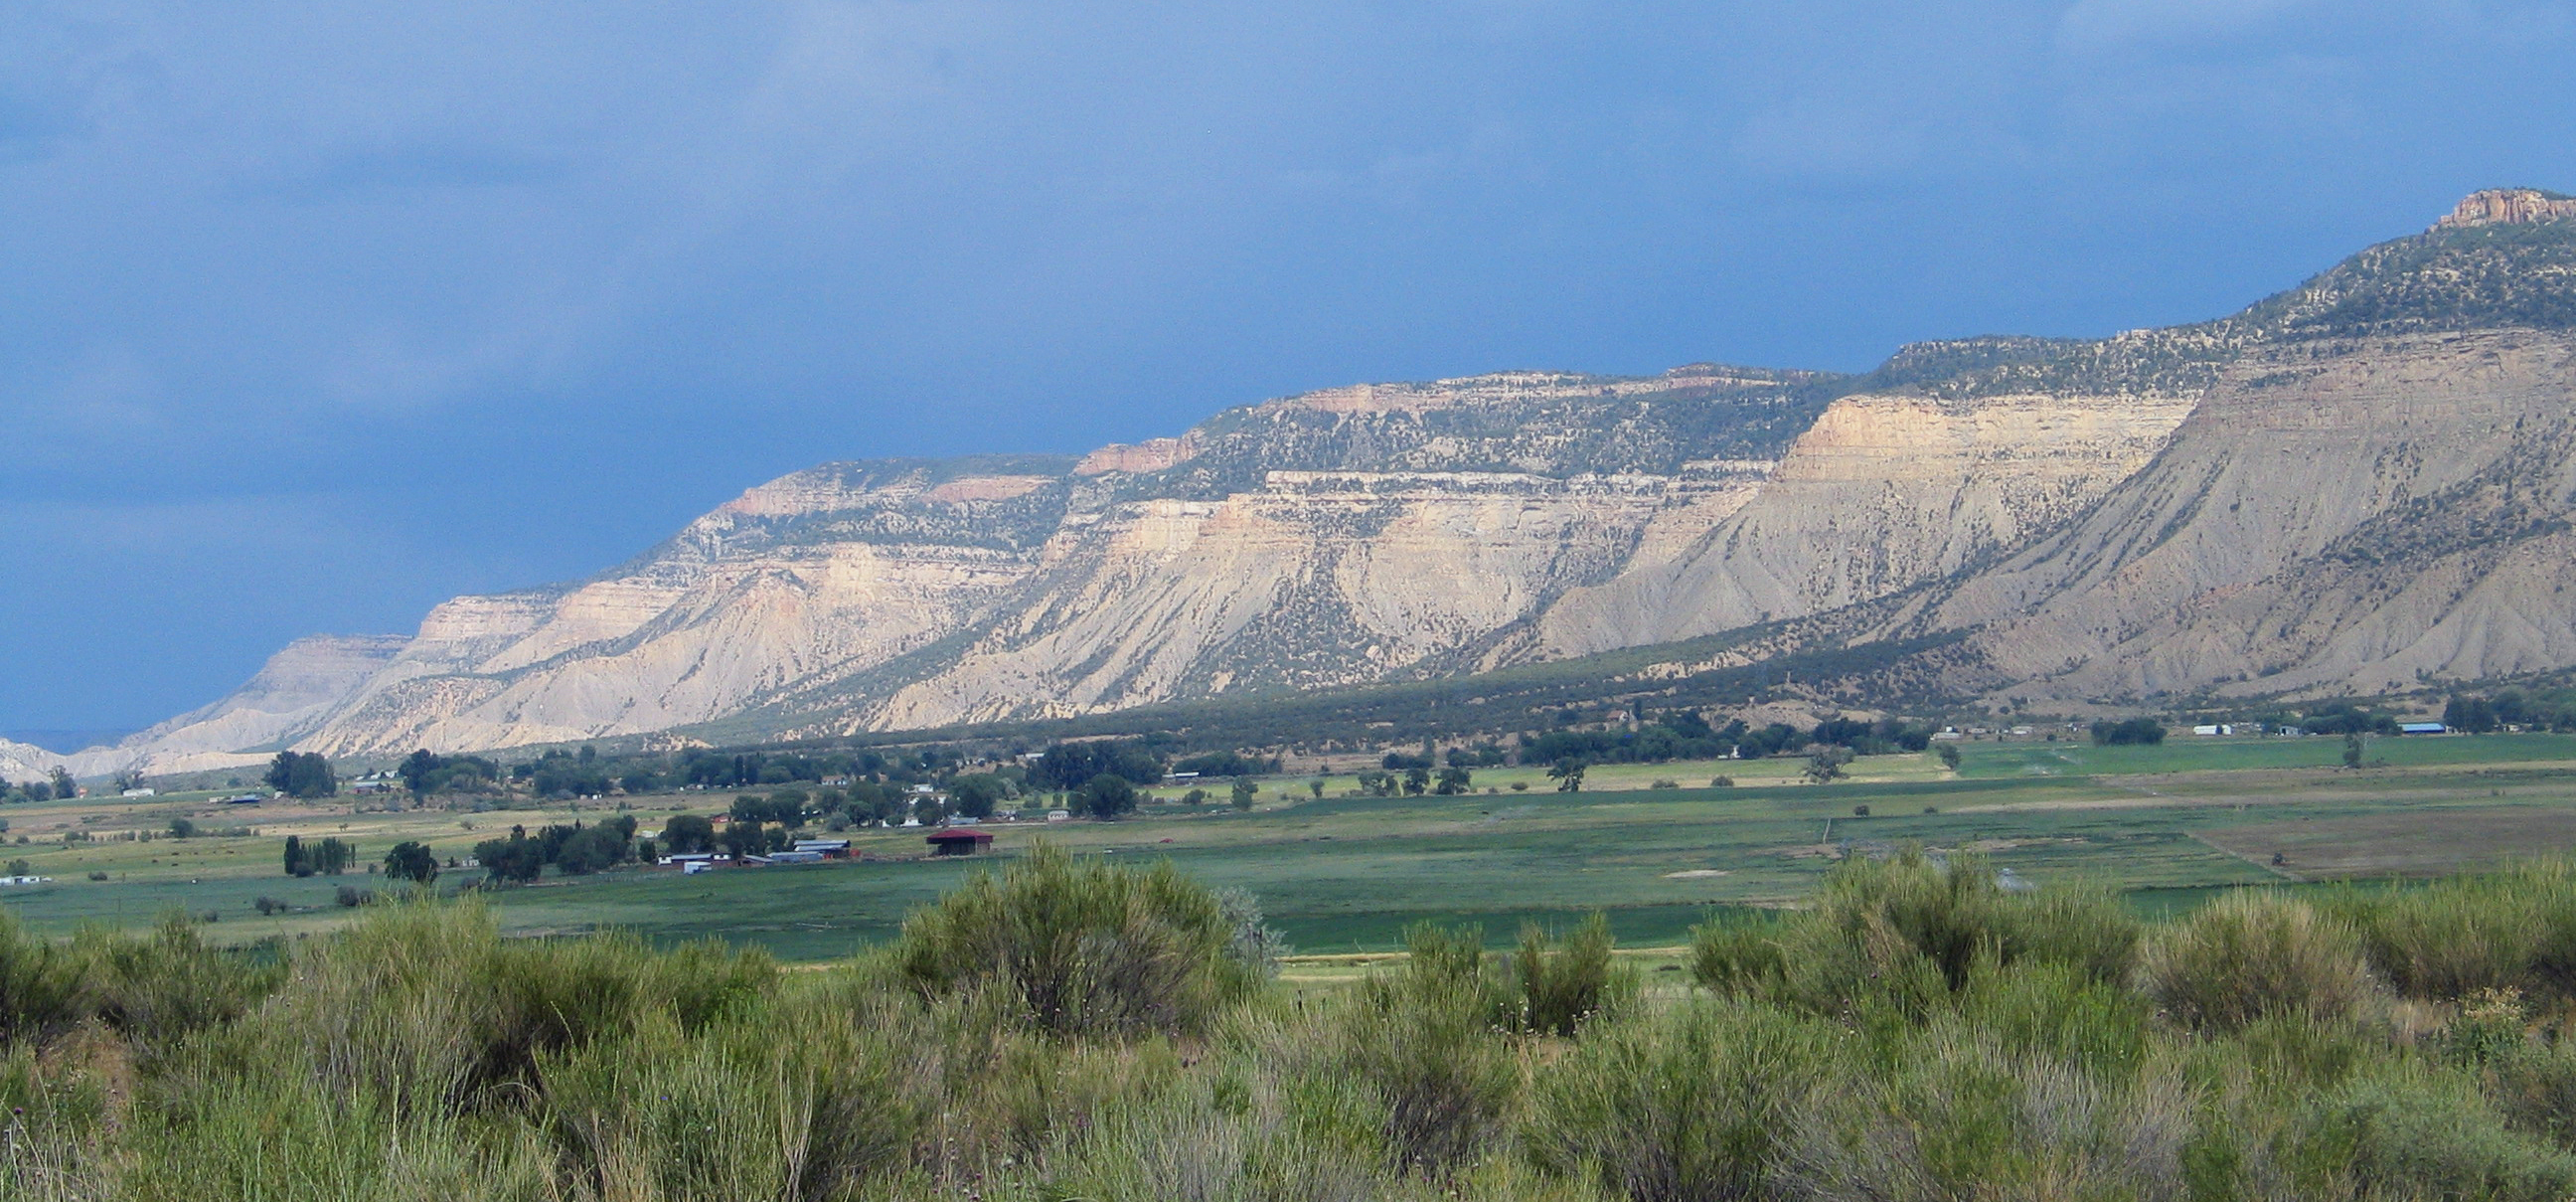 View of Mesa Verde landform